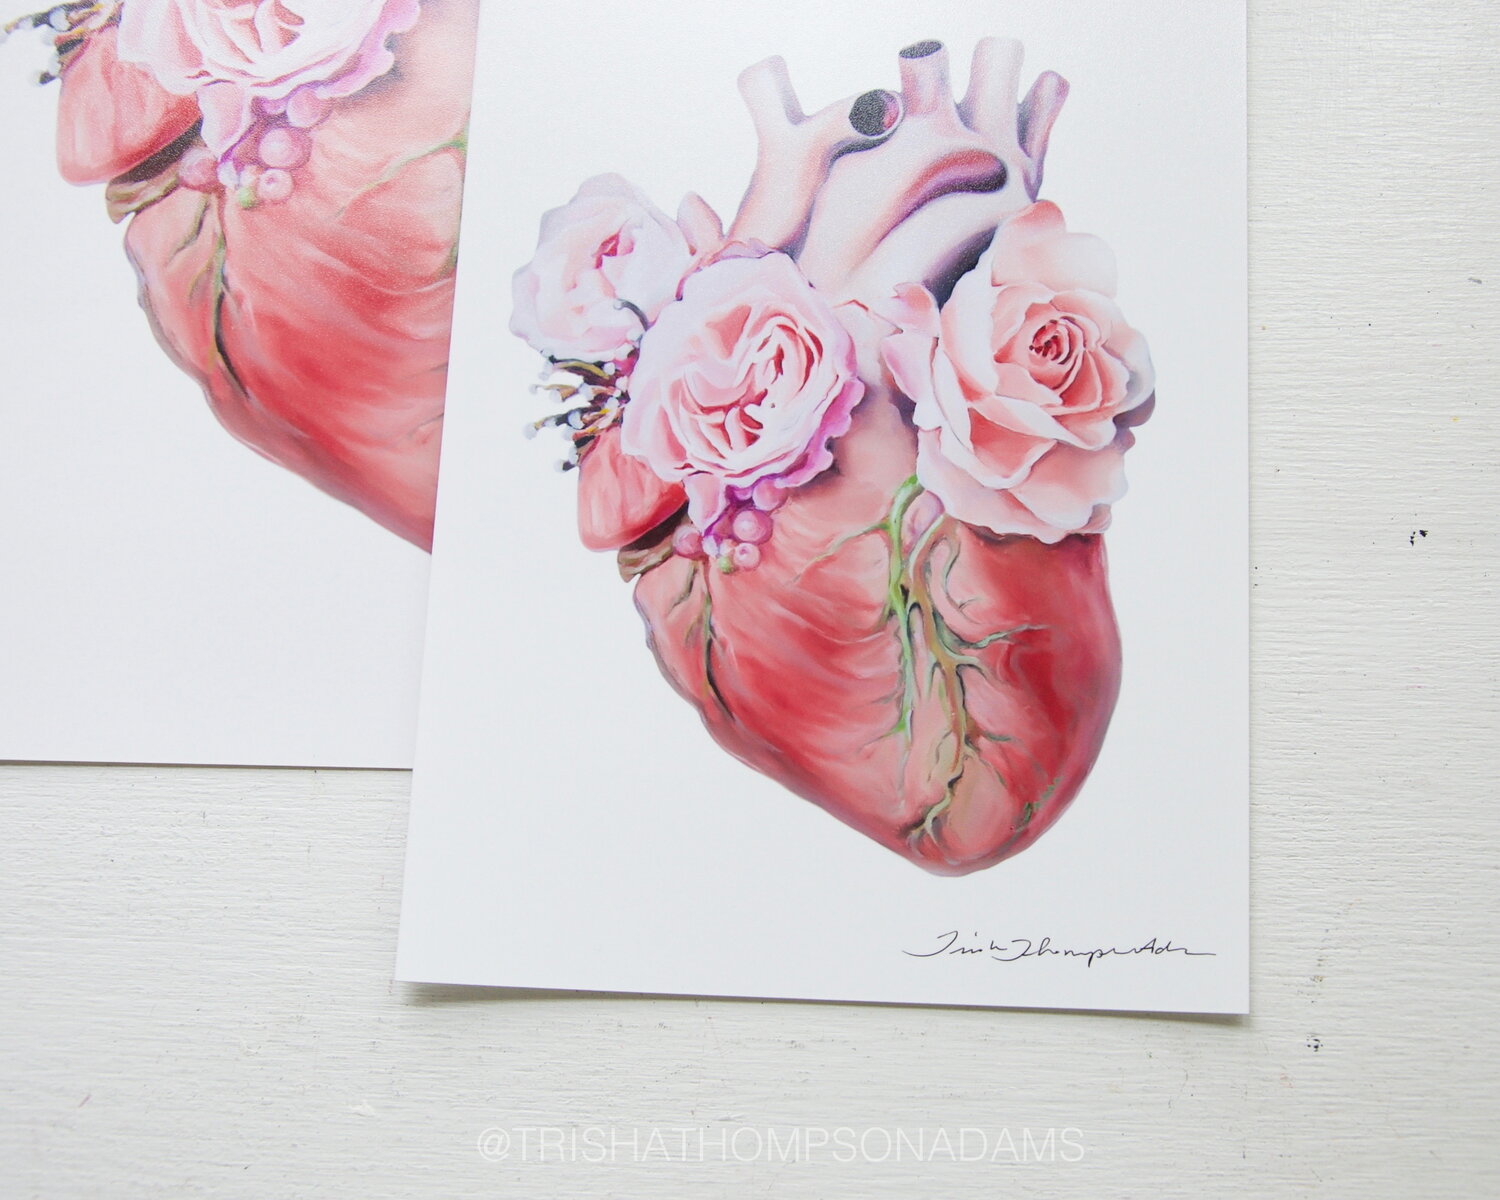 Floral Anatomical Heart Art Print — Trisha Thompson Adams